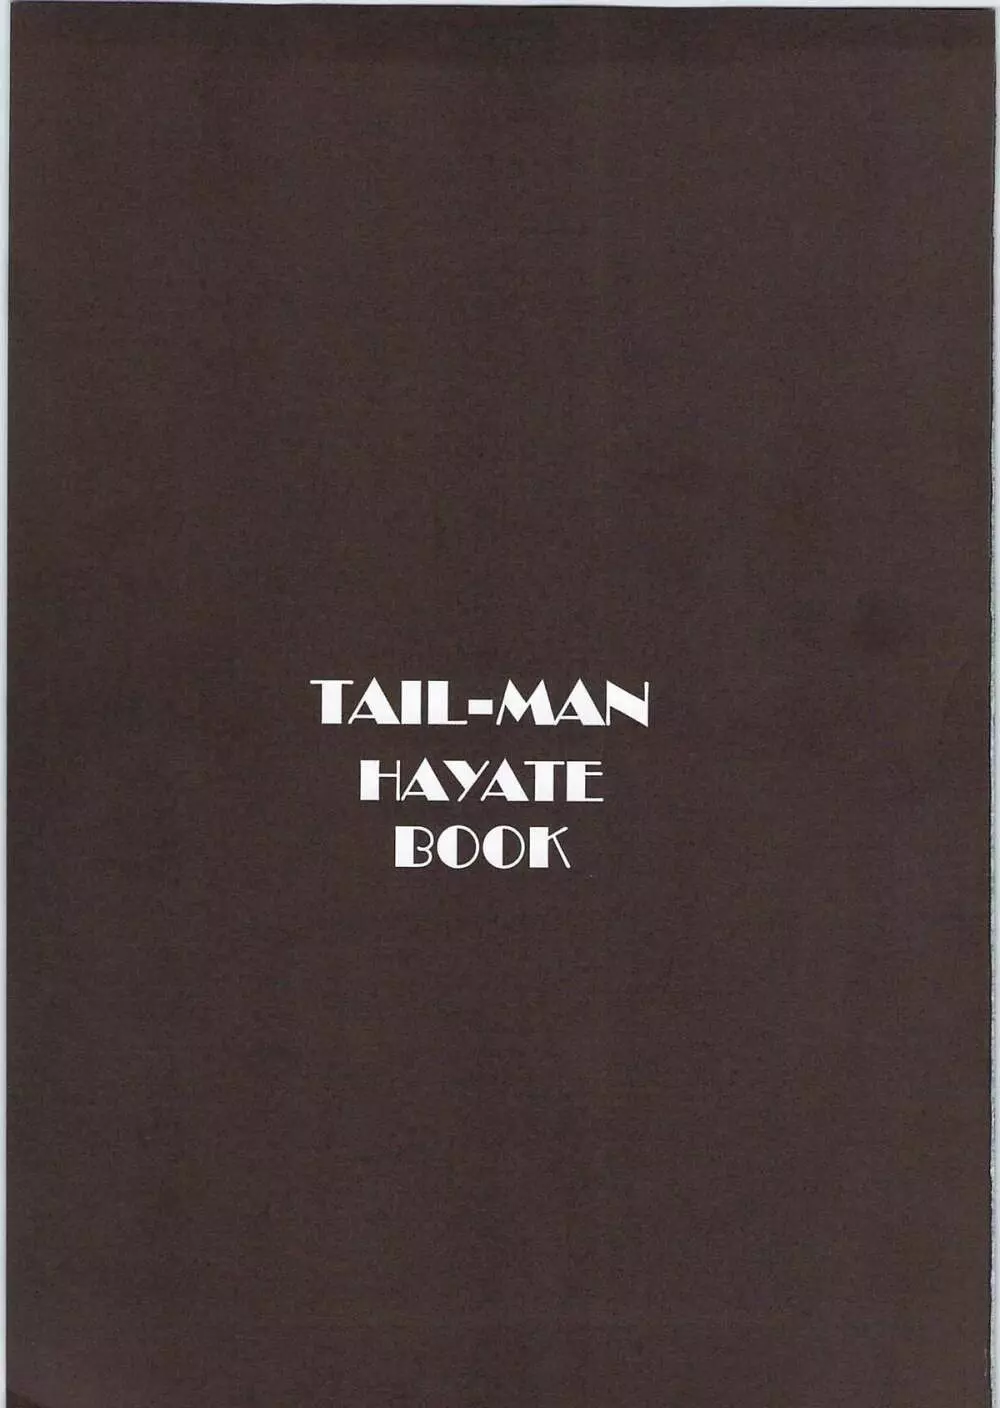 TAIL-MAN HAYATE BOOK - page2